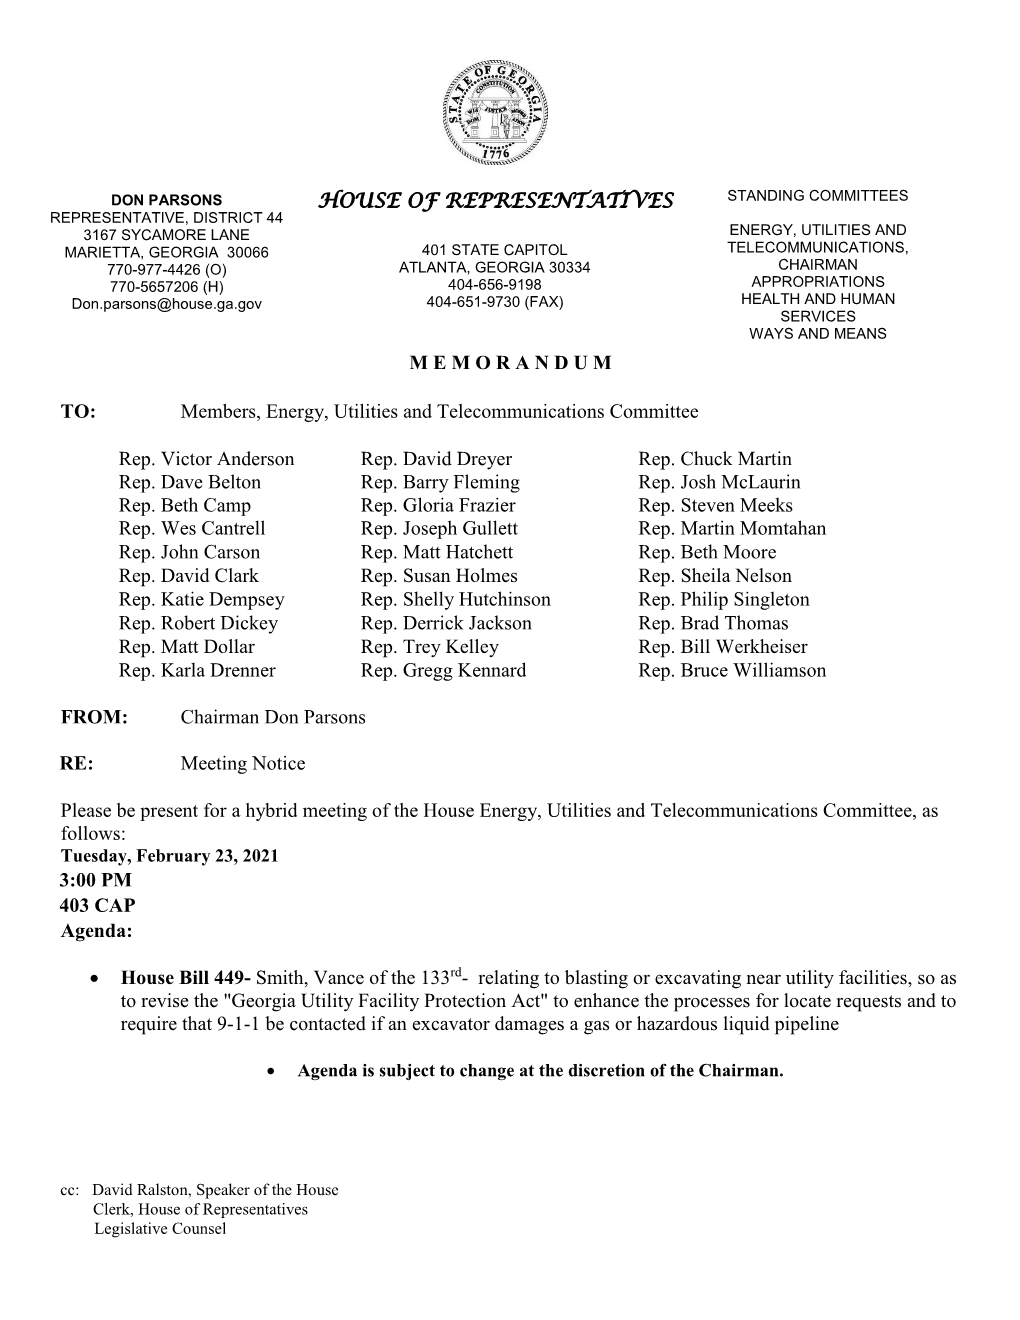 Members, Energy, Utilities and Telecommunications Committee Rep